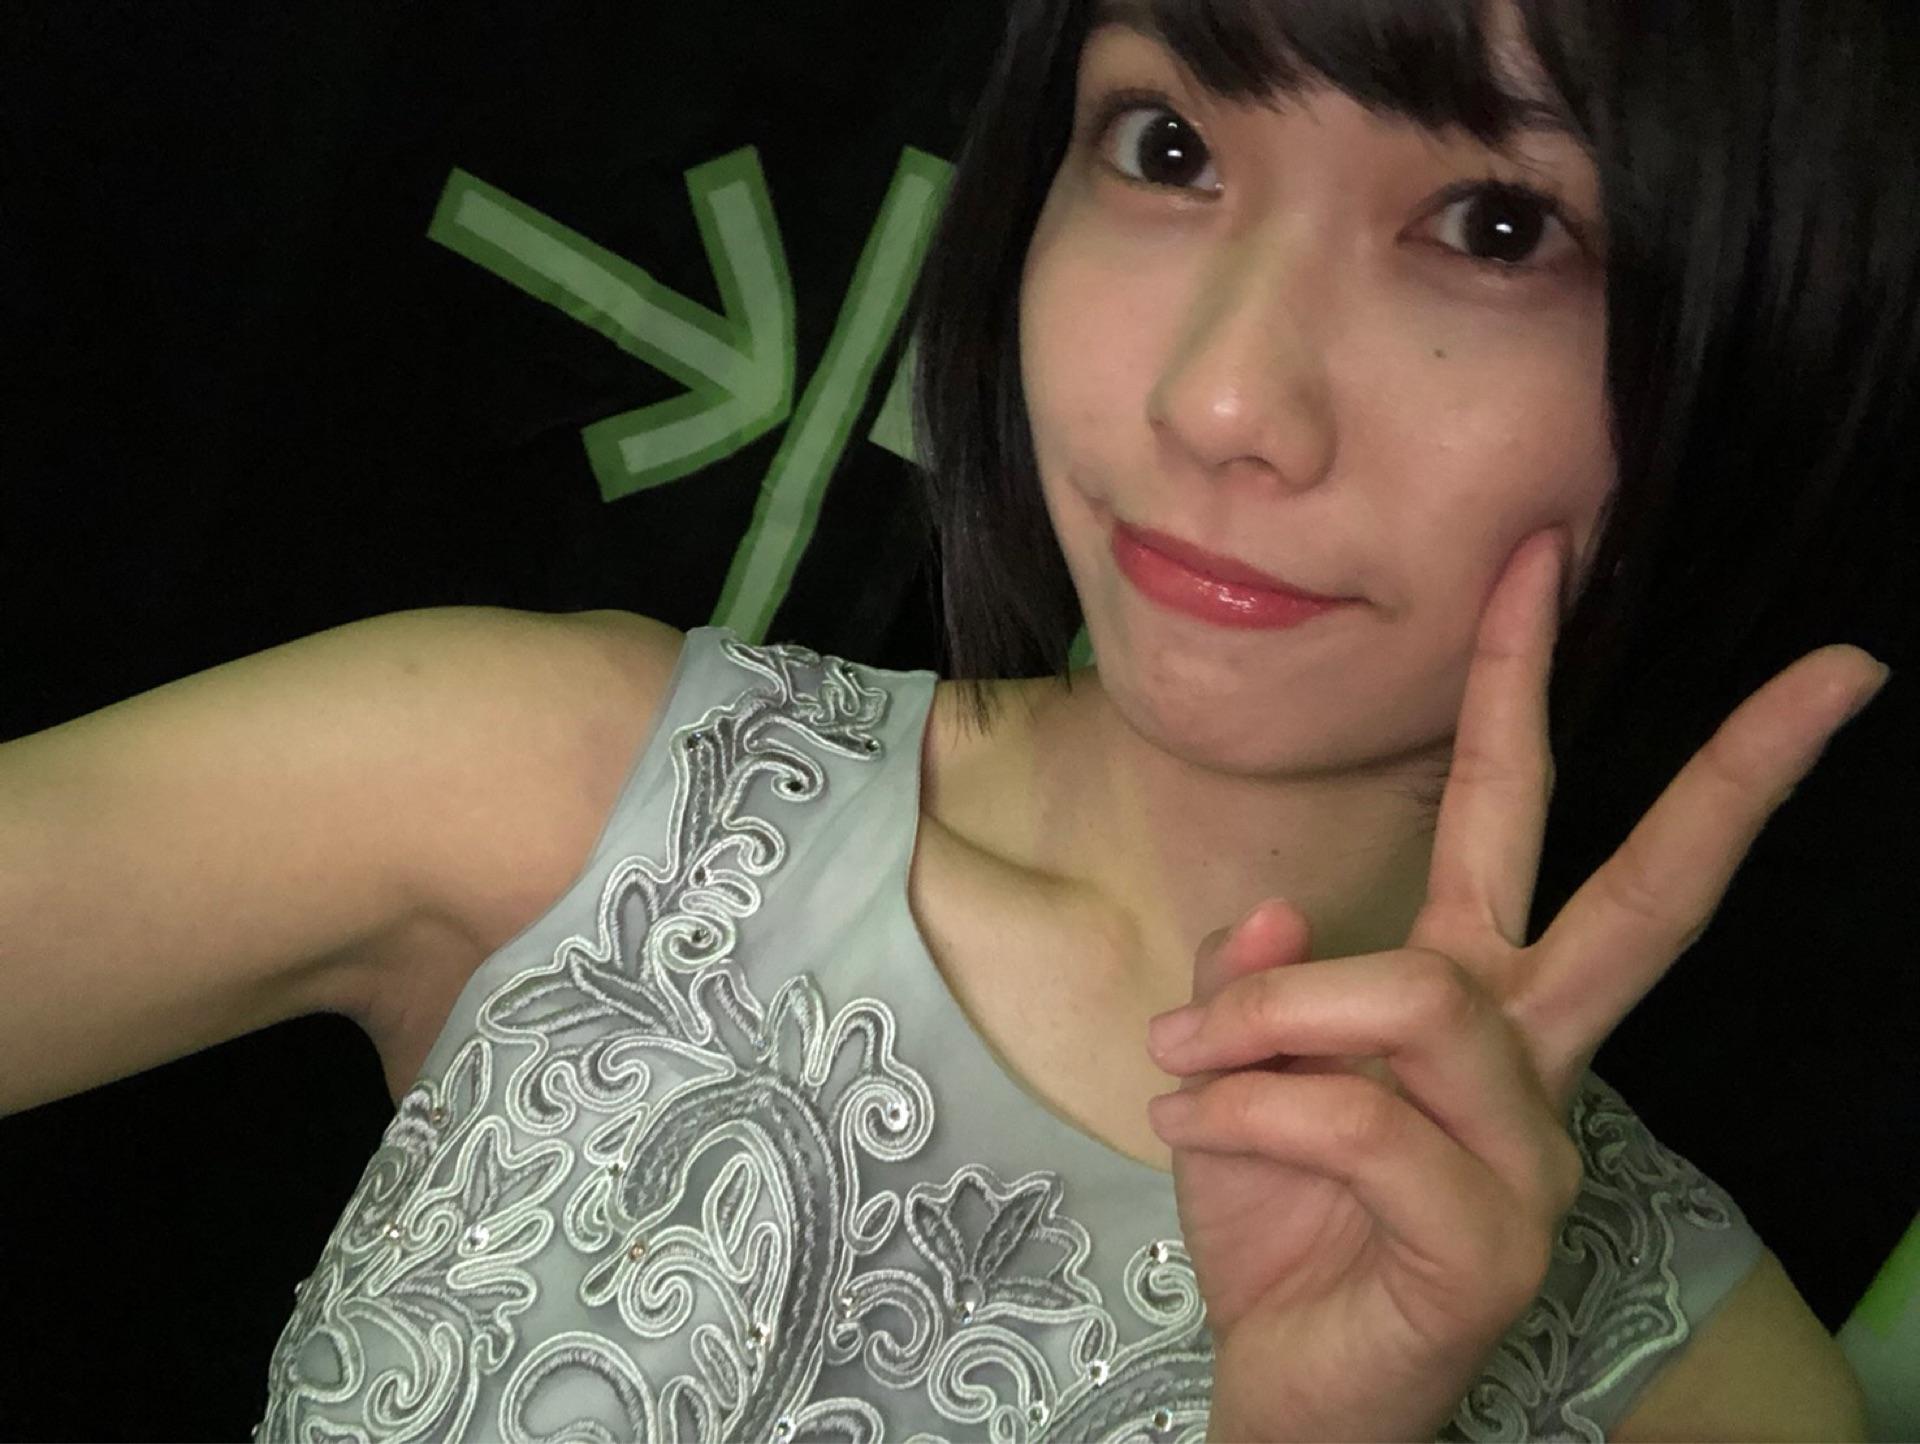 【AKB48】小田えりな応援スレ☆20【チーム8神奈川 × チームK】 	YouTube動画>7本 ->画像>227枚 